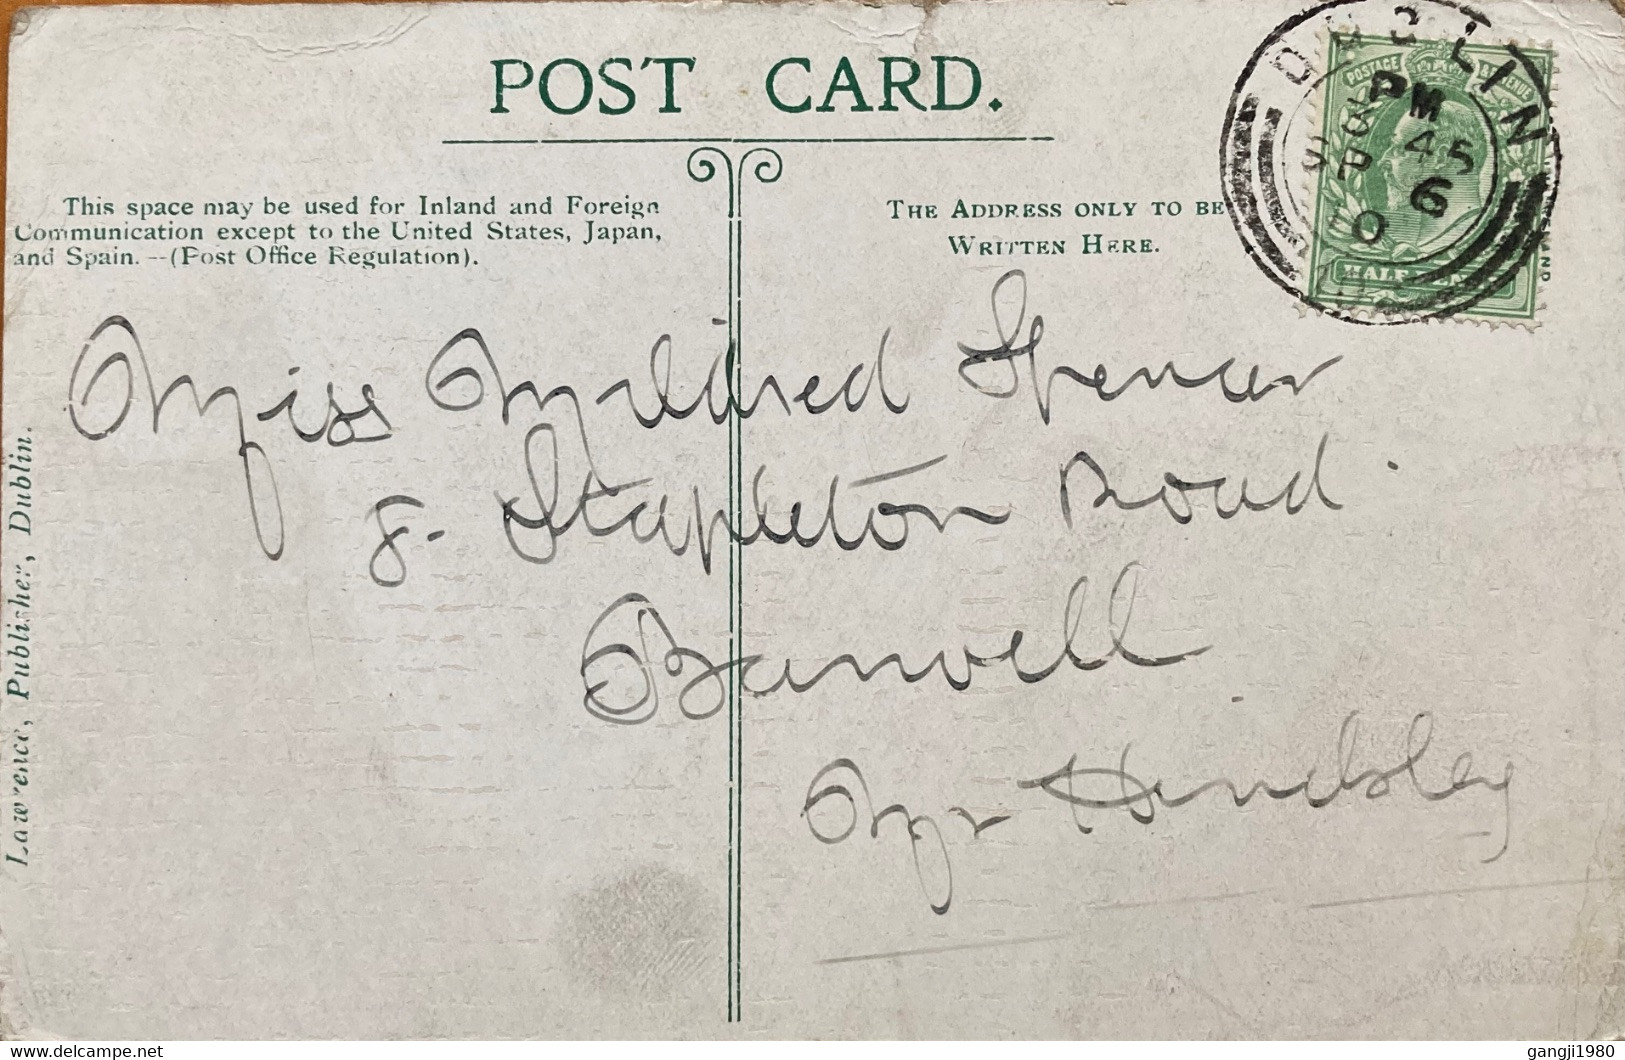 IRELAND 1910, NICE SILVER POSTCARD, MAP,  KING EDWARD STAMP ,DUBLIN CITY CANCEL - Briefe U. Dokumente